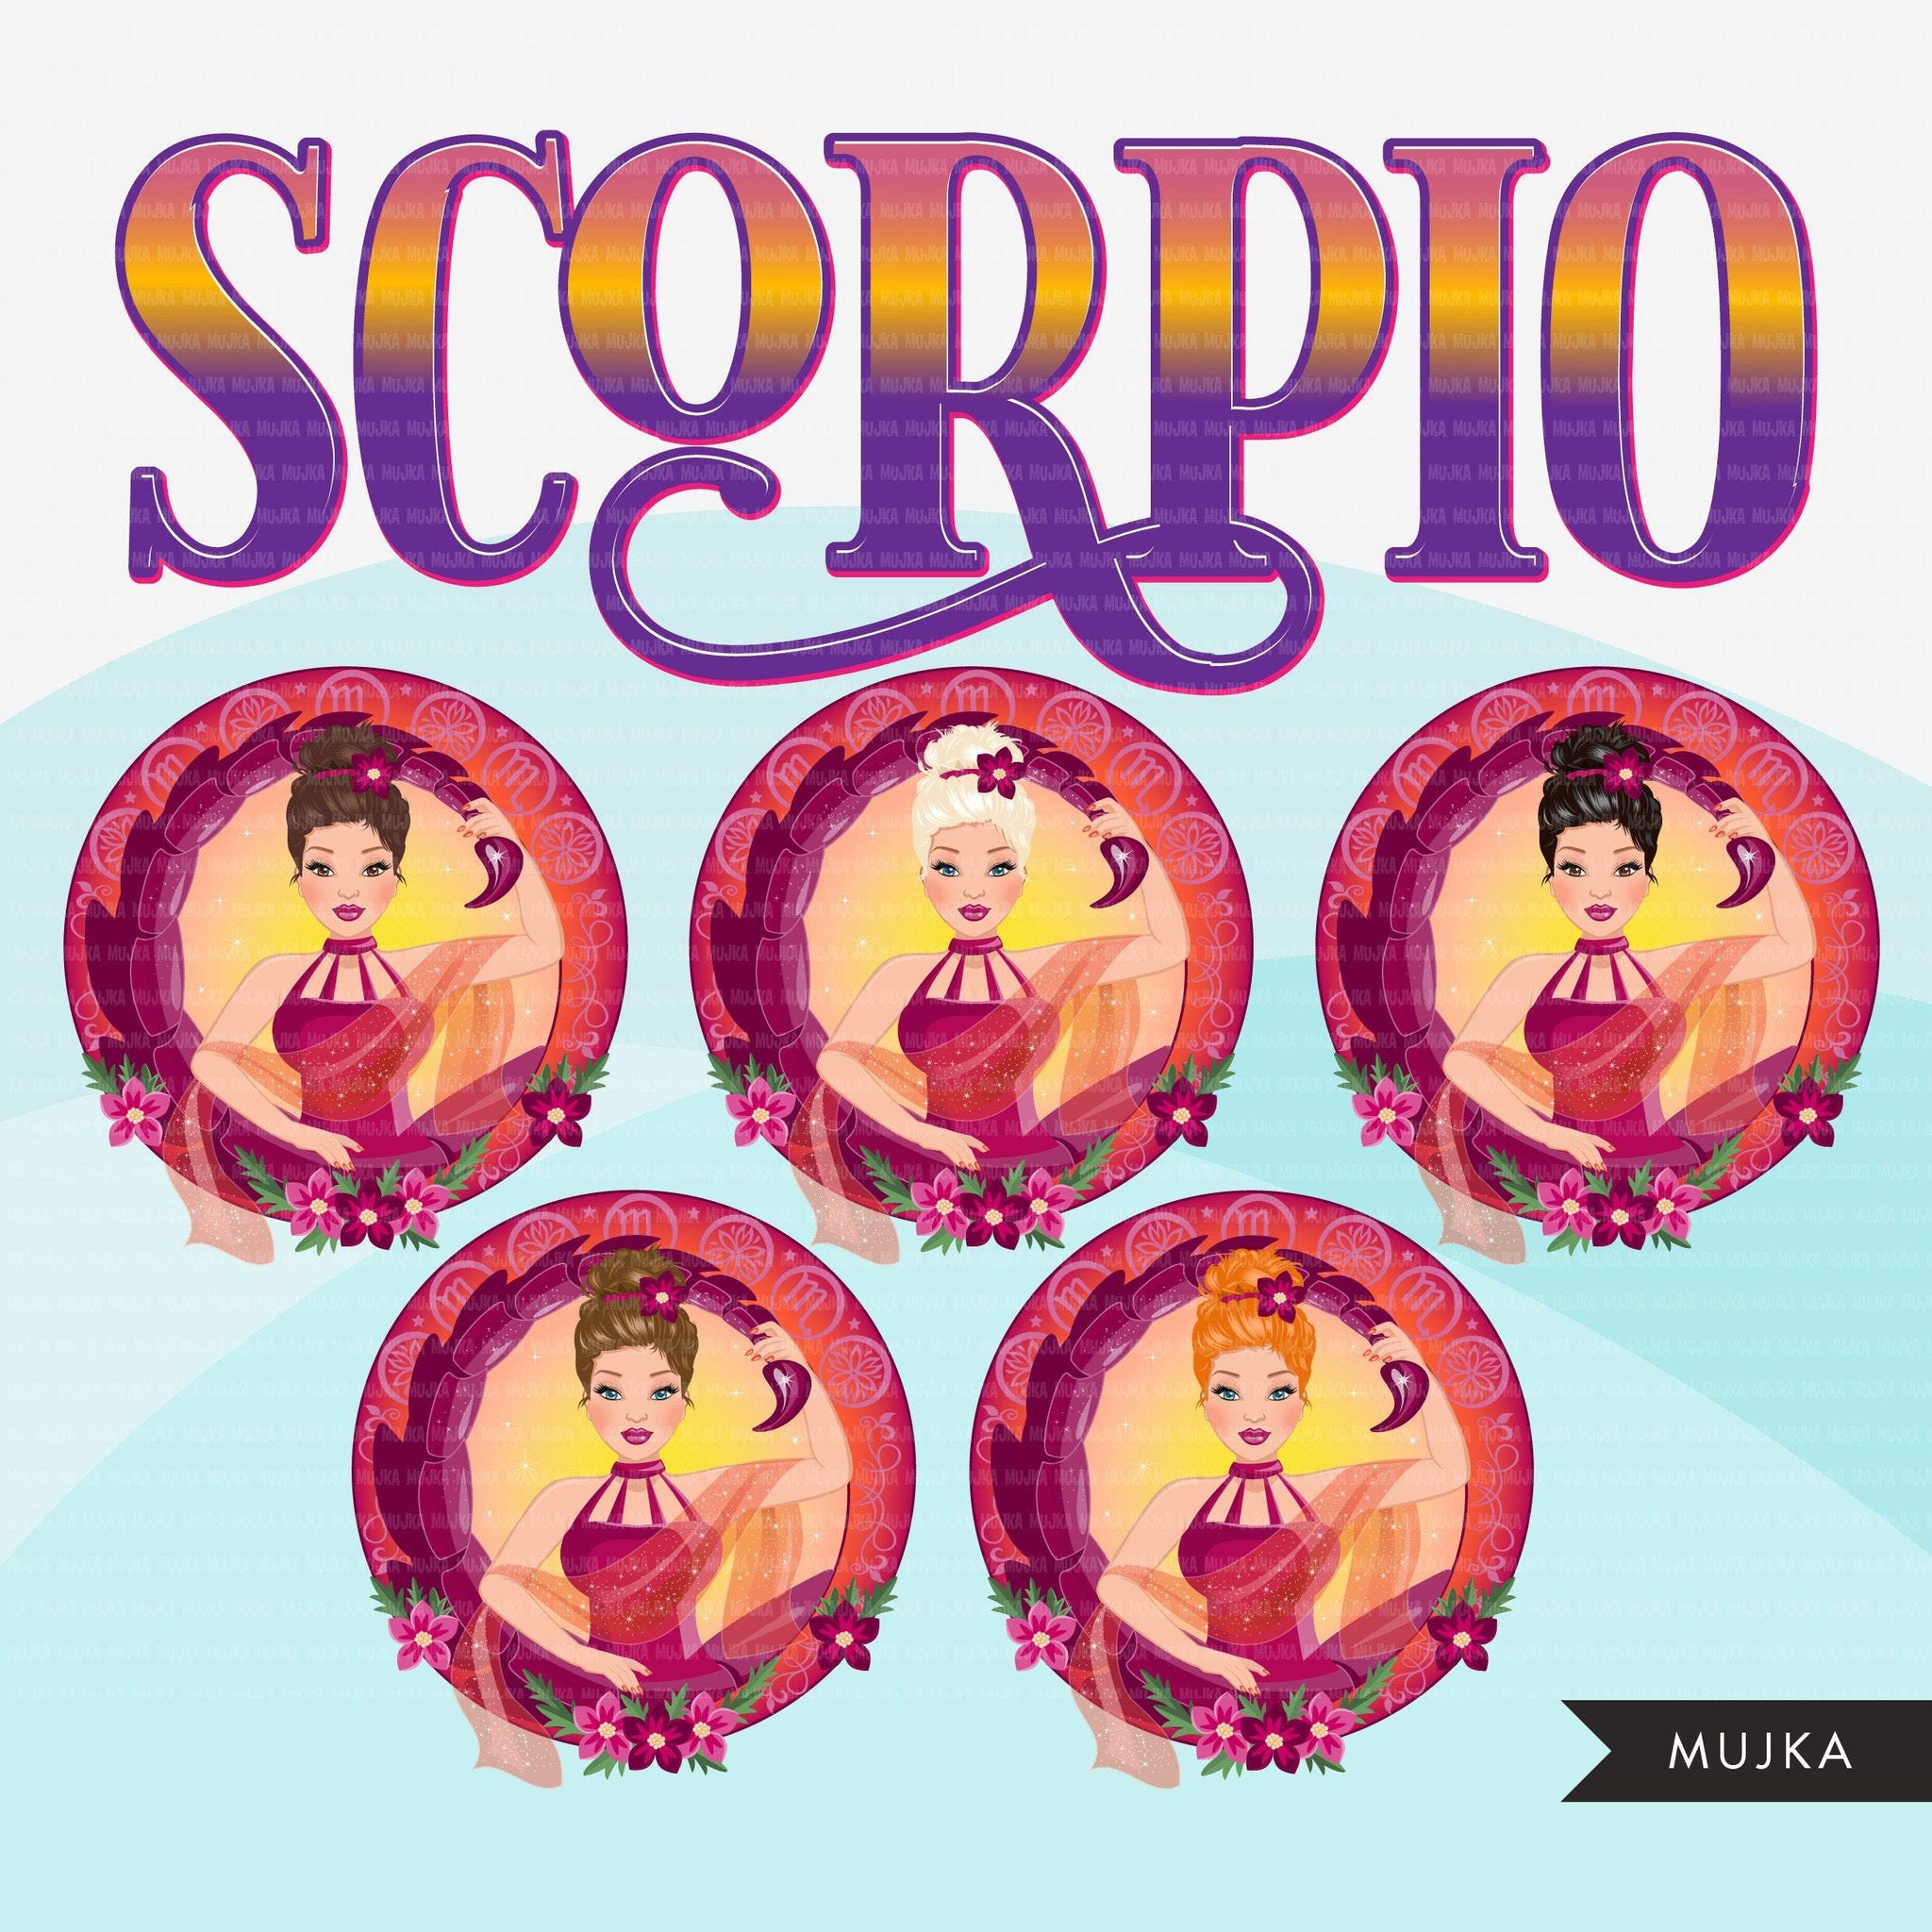 Zodiac Scorpio Clipart, Png digital download, Sublimation Graphics for Cricut & Cameo, Caucasian updo bun Woman Horoscope sign designs